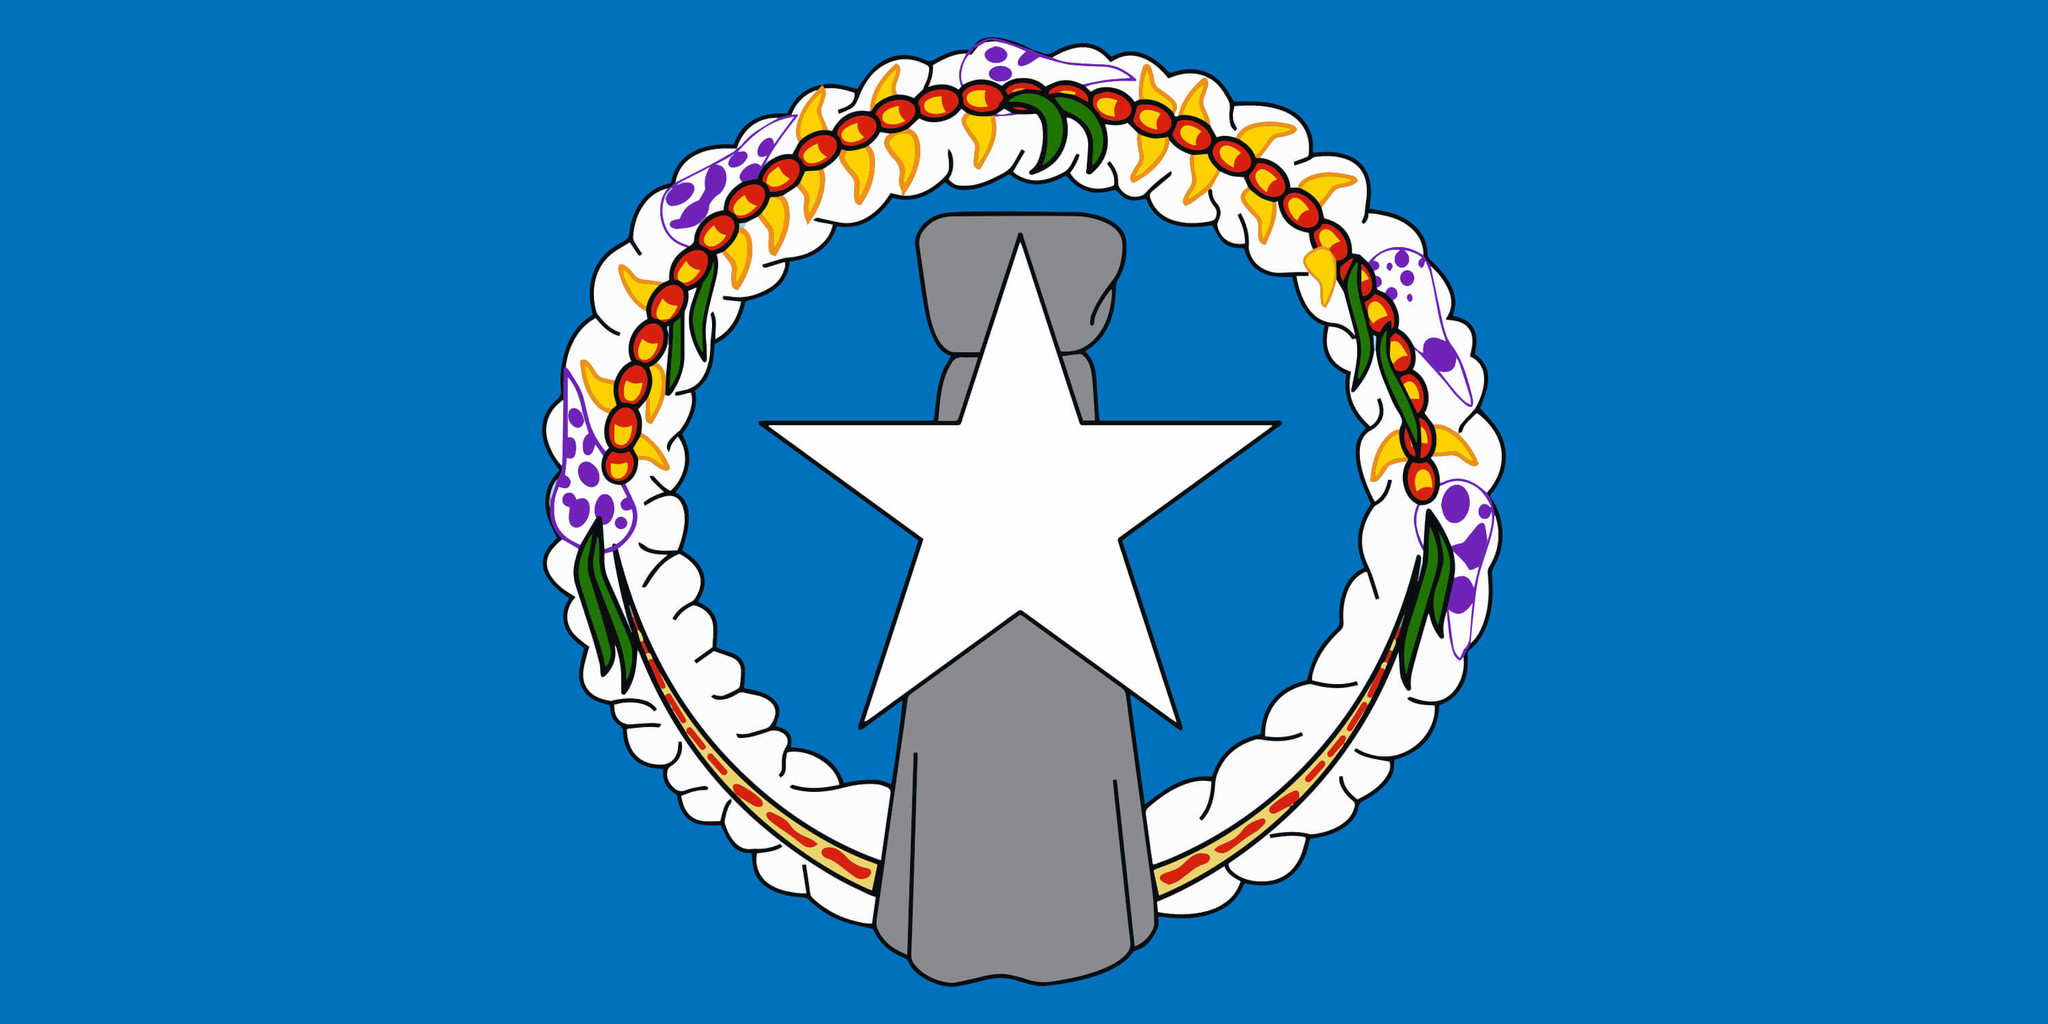 Flag of the Northern Mariana Islands